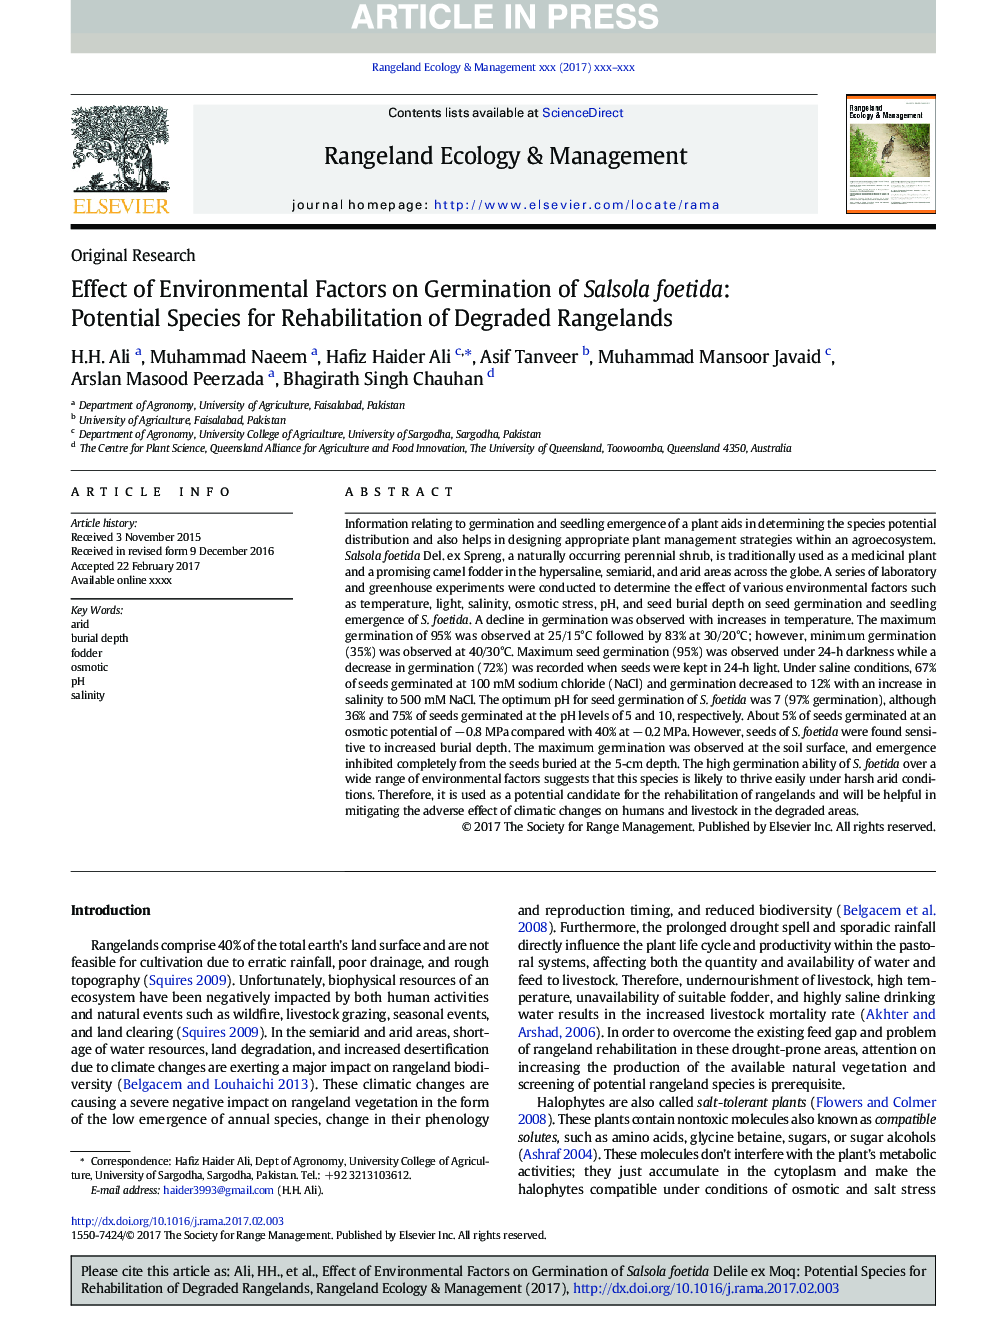 Effect of Environmental Factors on Germination of Salsola foetida: Potential Species for Rehabilitation of Degraded Rangelands